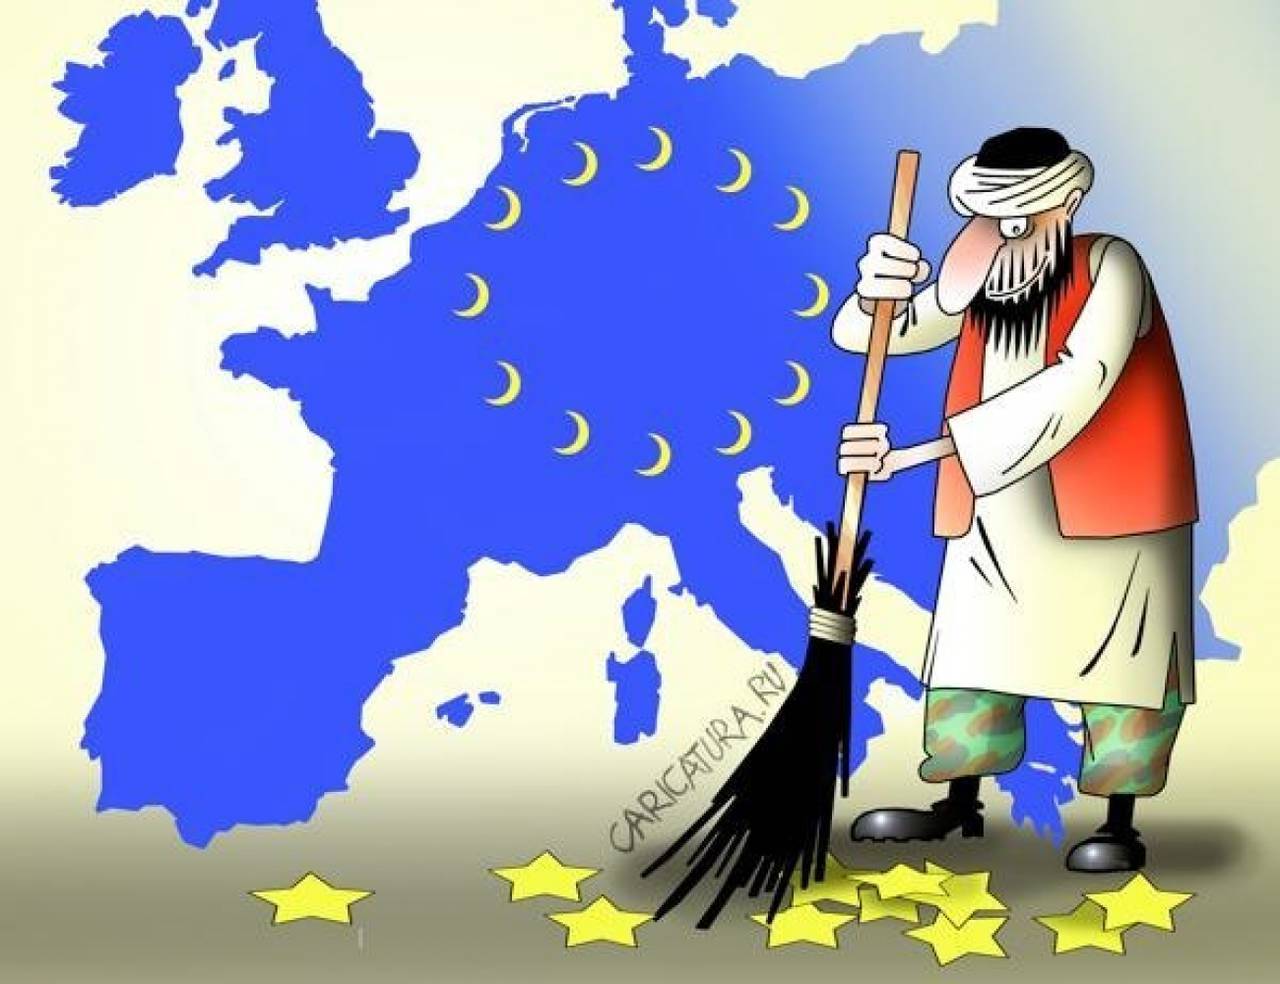 Карикатура на ЕС. Карикатура на Евросоюз. Карикатура на Евросоюз и США. Европейцы карикатура.